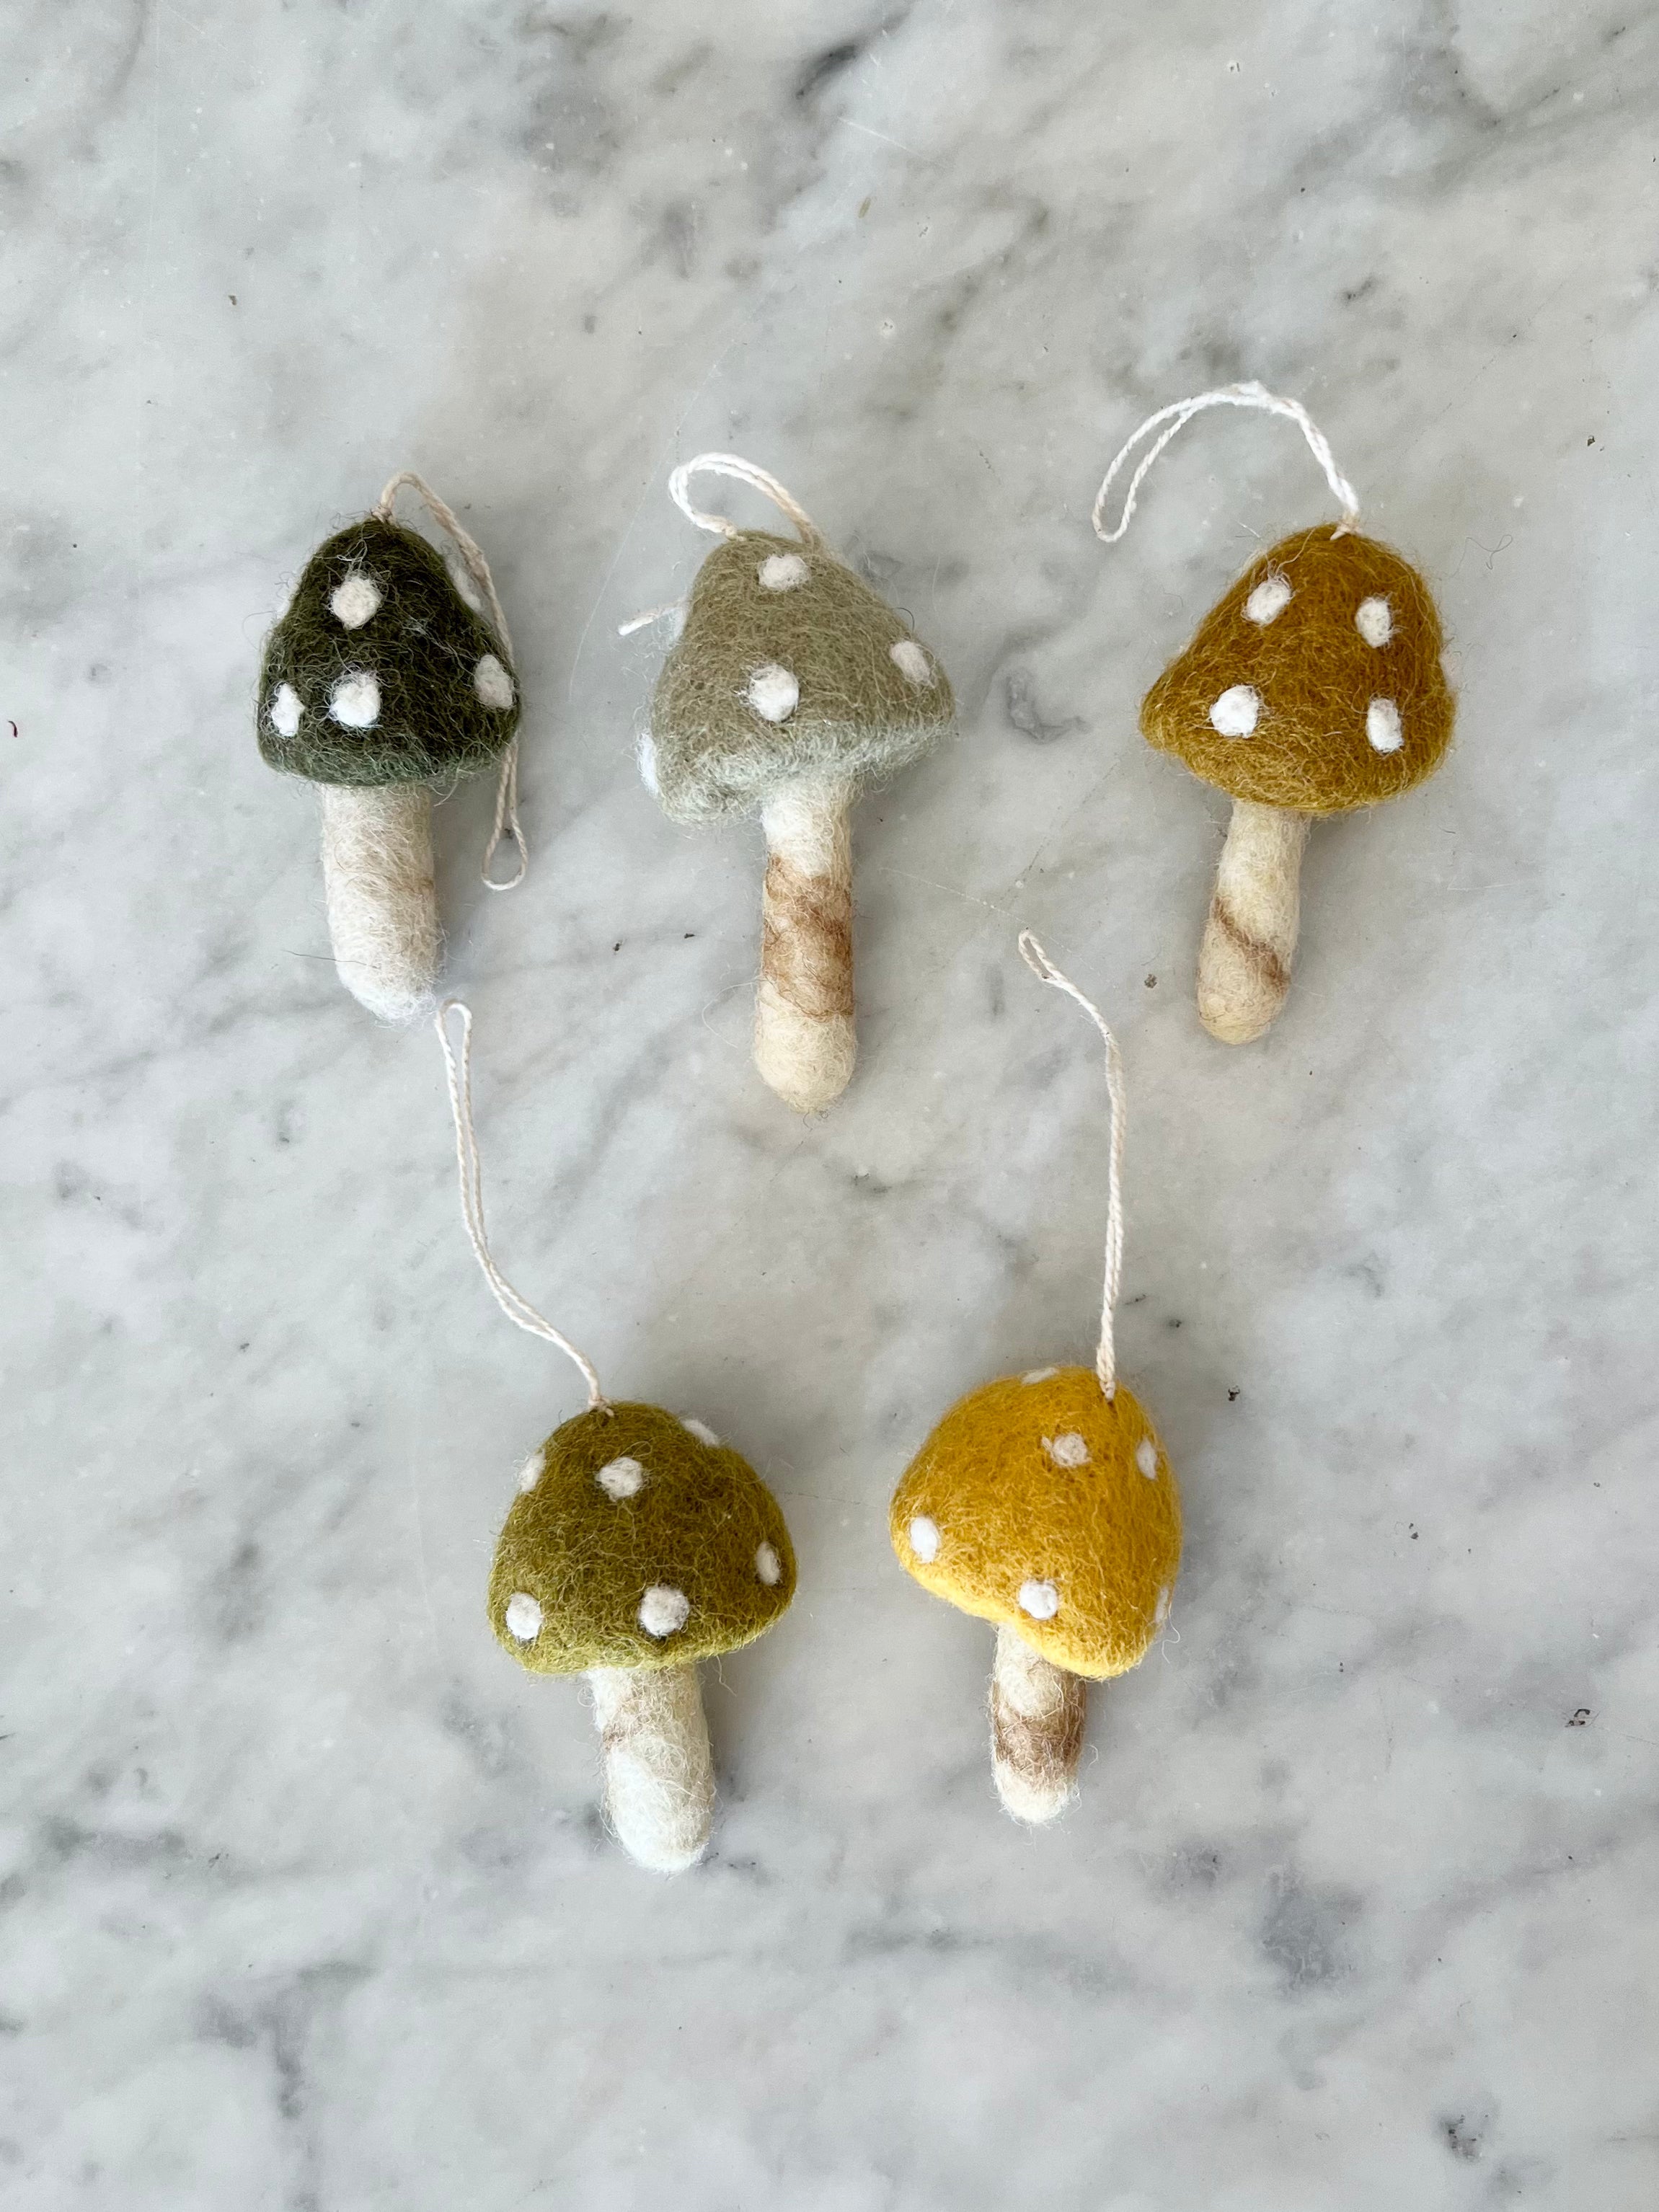 Small Felt Mushroom Ornament - Earth Tones